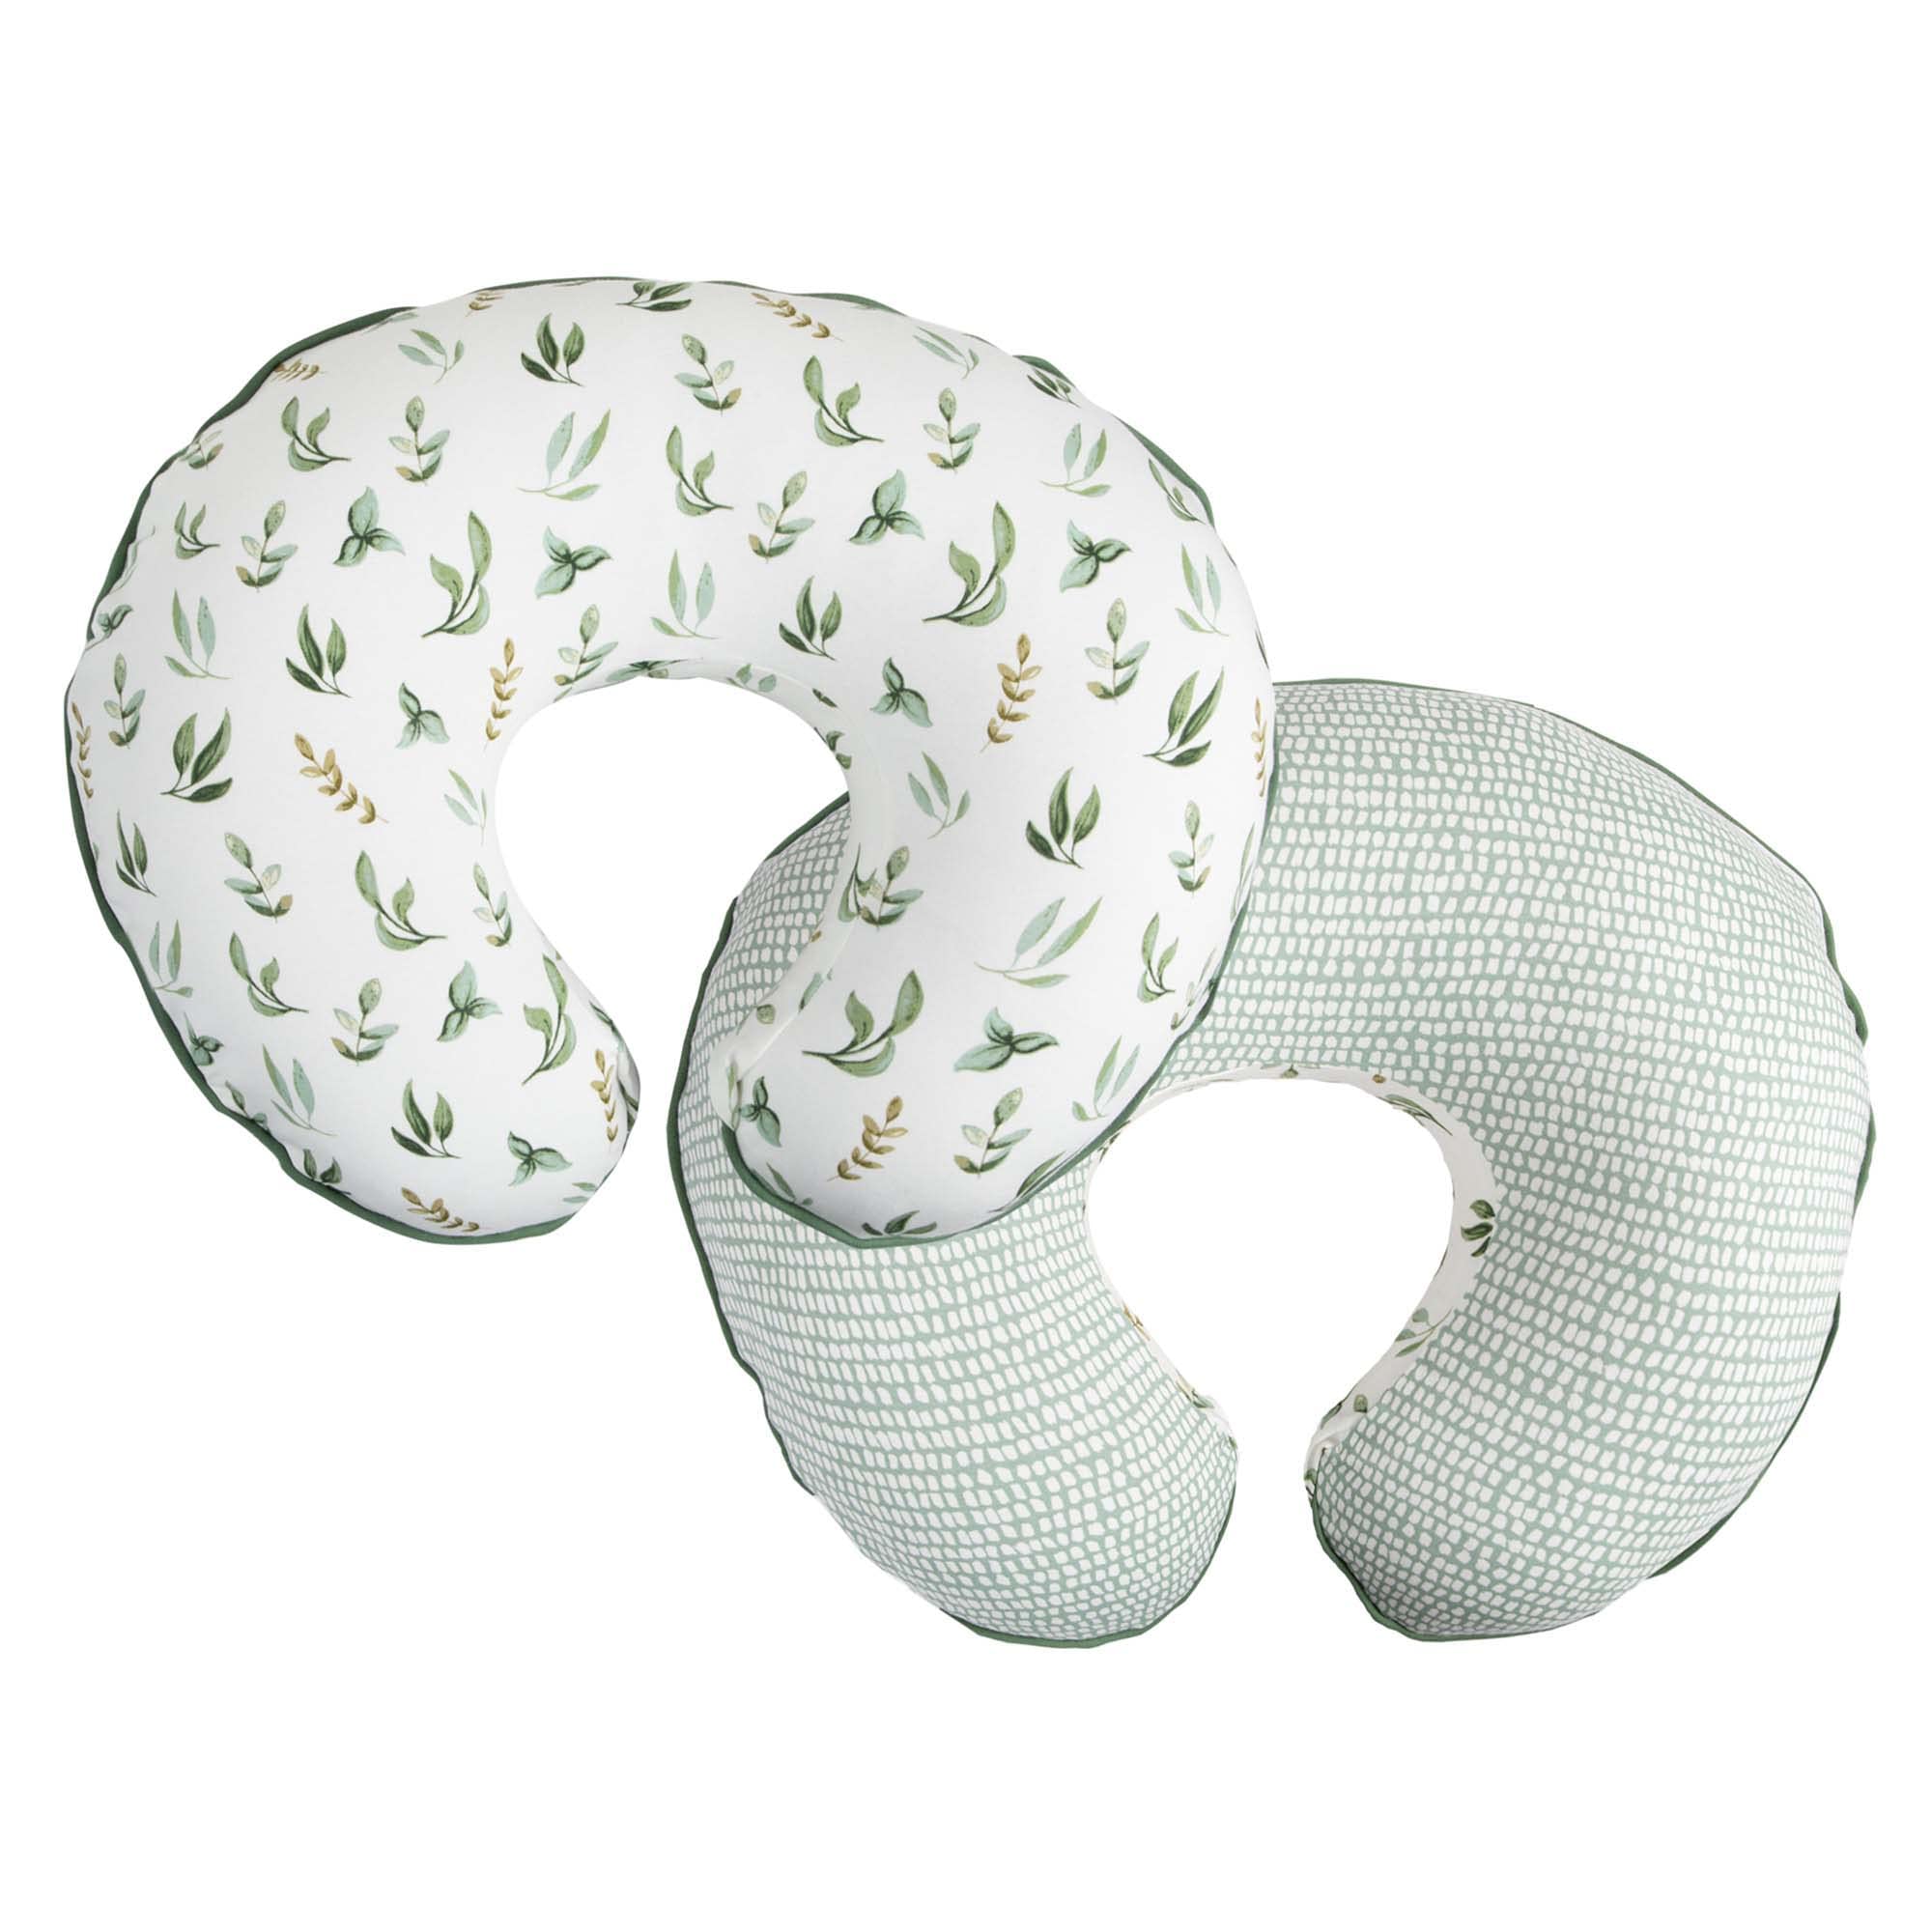 Boppy Organic Original Support Nursing Pillow, Green Little Leaves, Ergonomic Breastfeeding, Bottle Feeding, Bonding, 100% Organic Cotton, Hypoallergenic Fill, Machine Washable